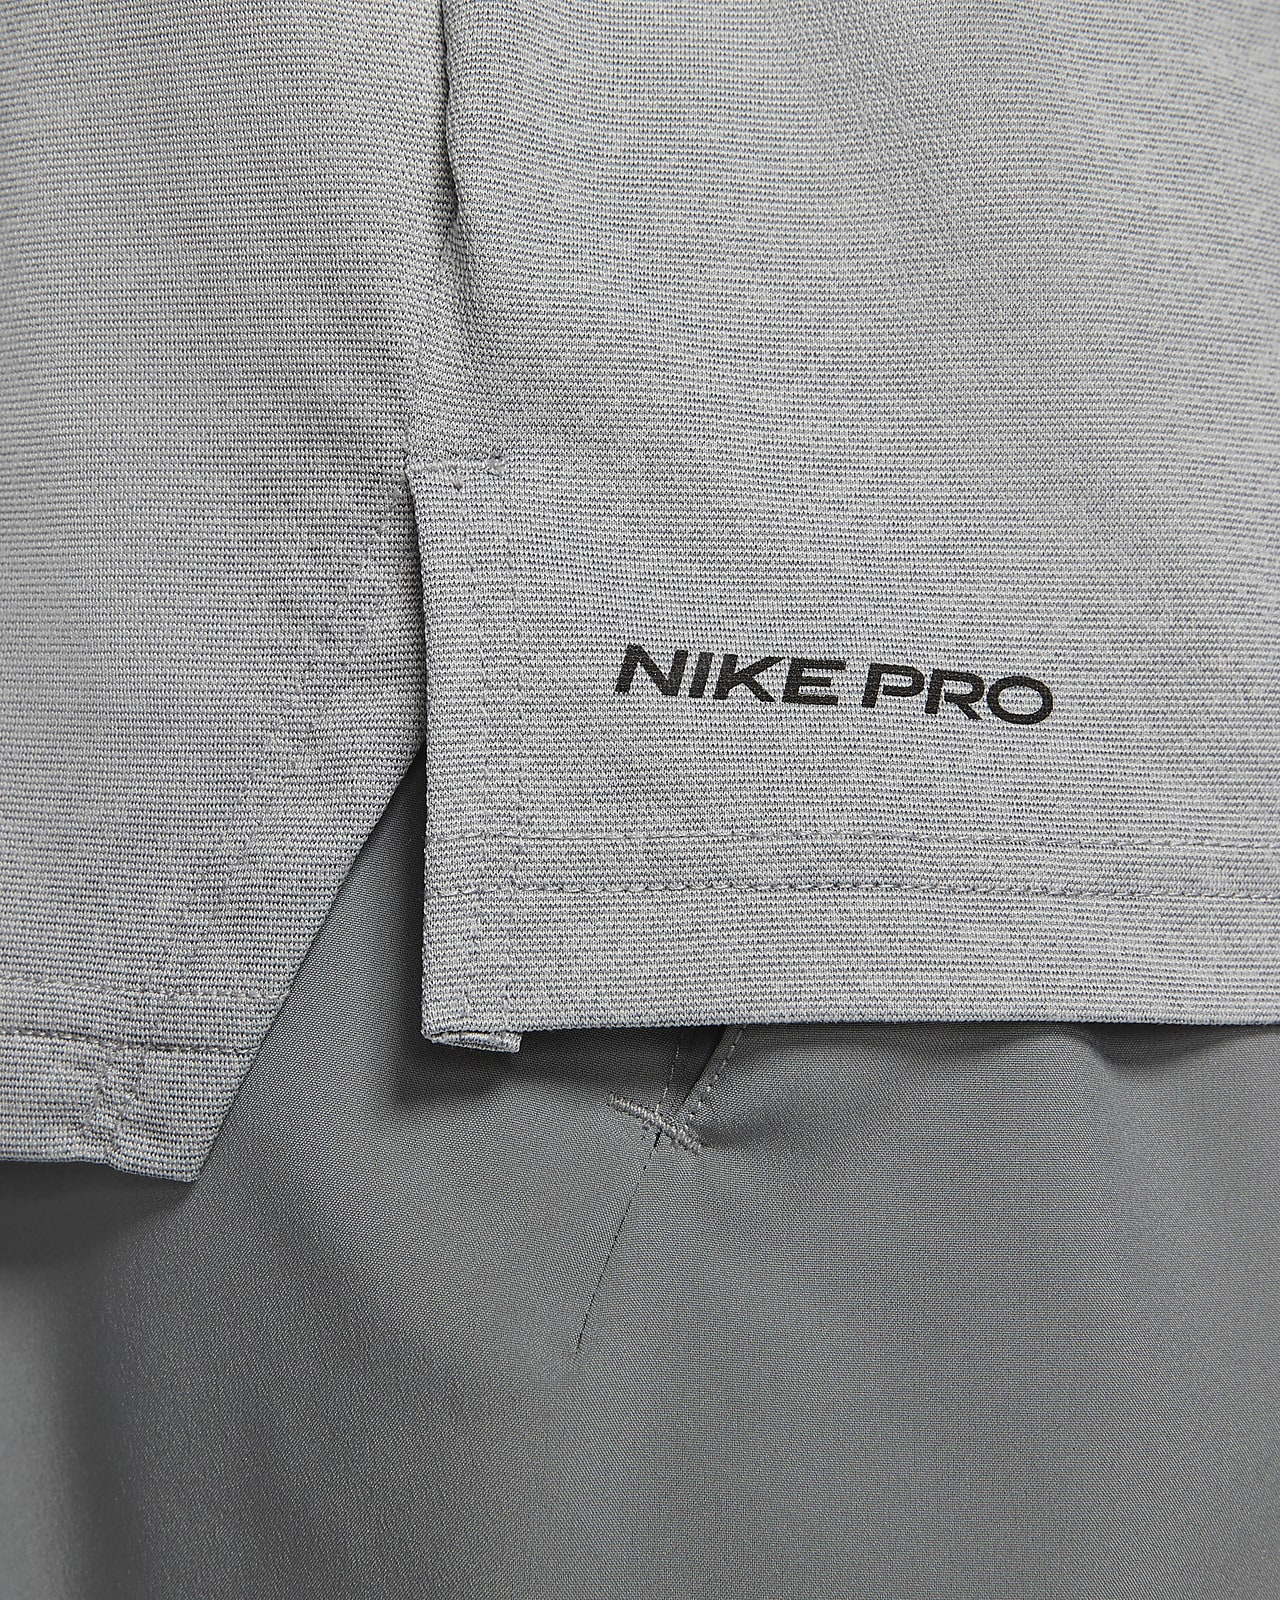 Caballo básico enchufe Nike Pro Dri-FIT Camiseta de manga corta - Hombre. Nike ES